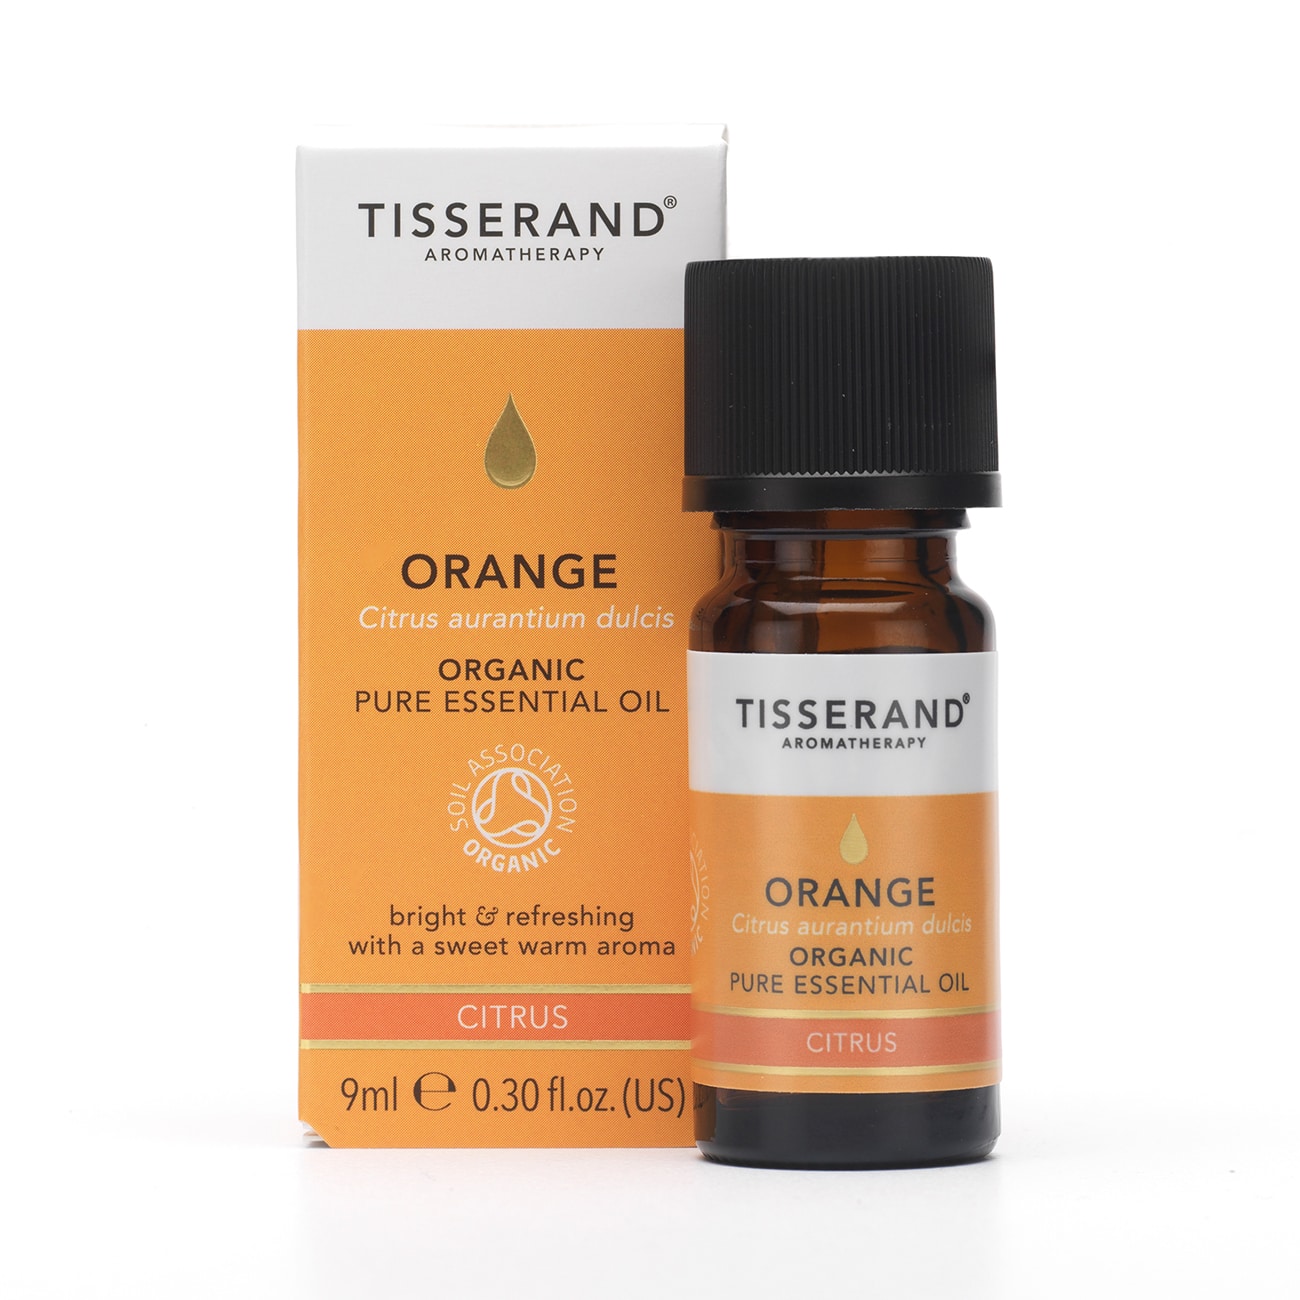 Tisserand Aromatherapy Orange Organic Pure Essential Oil 9ml Grace Beauty